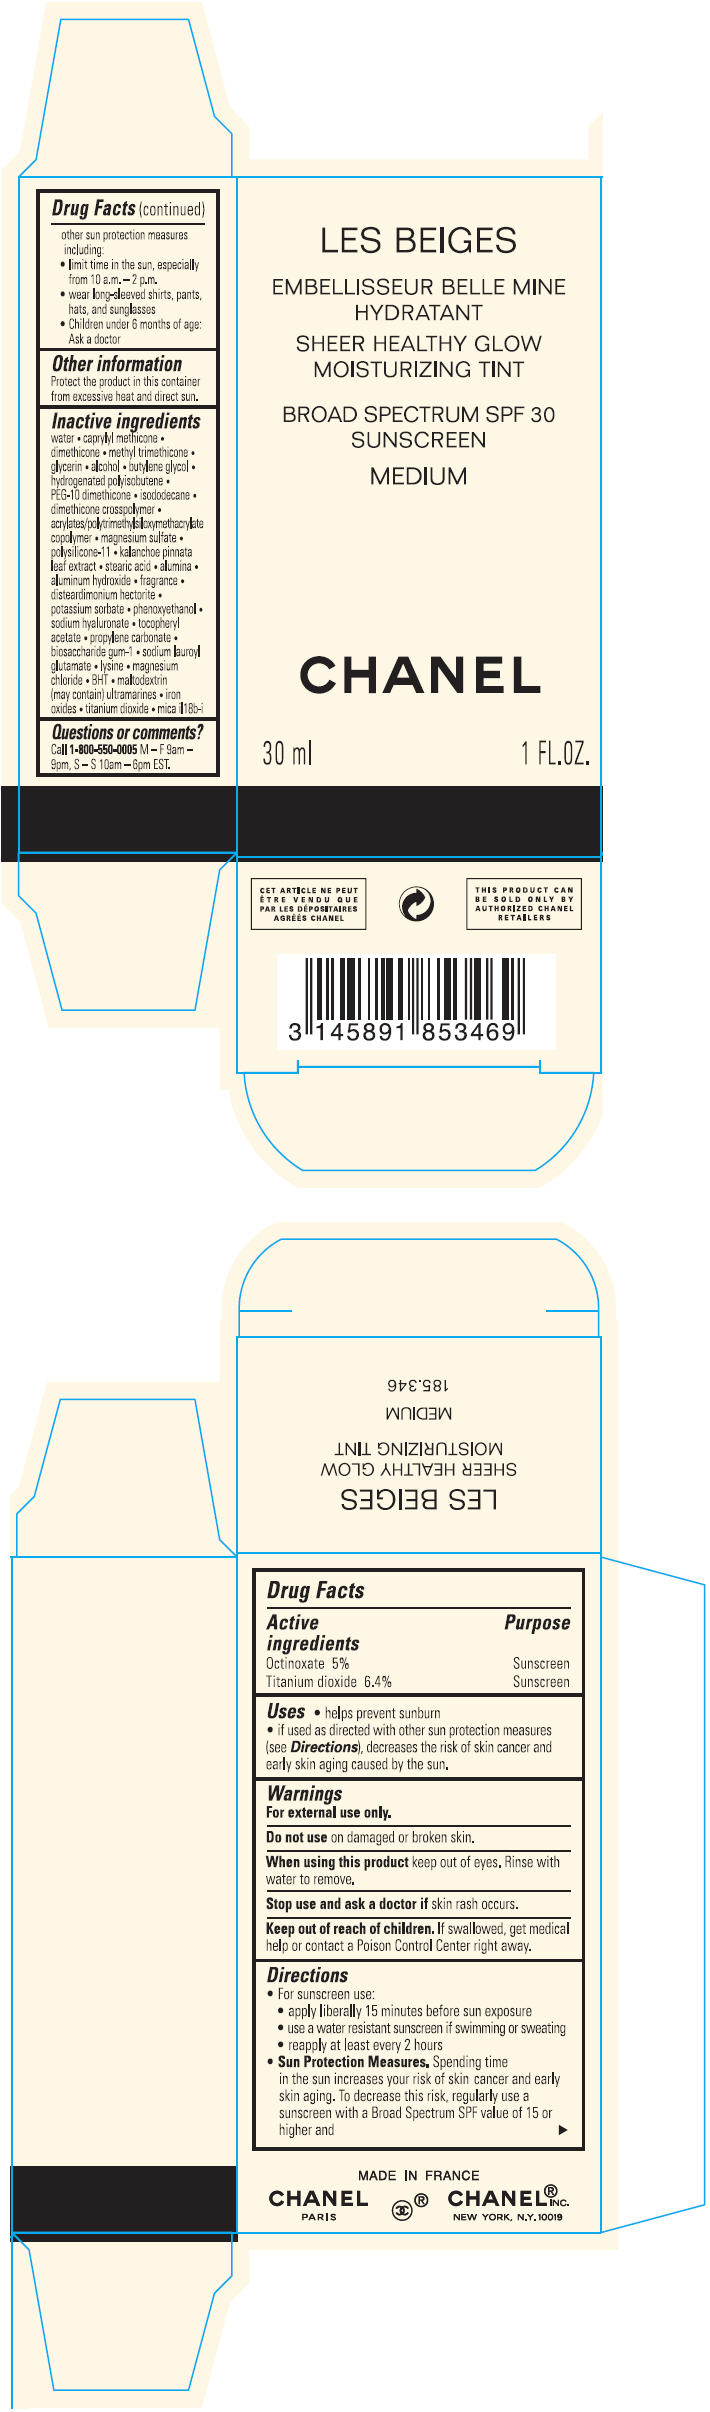 PRINCIPAL DISPLAY PANEL - 30 ml Bottle Carton - Medium